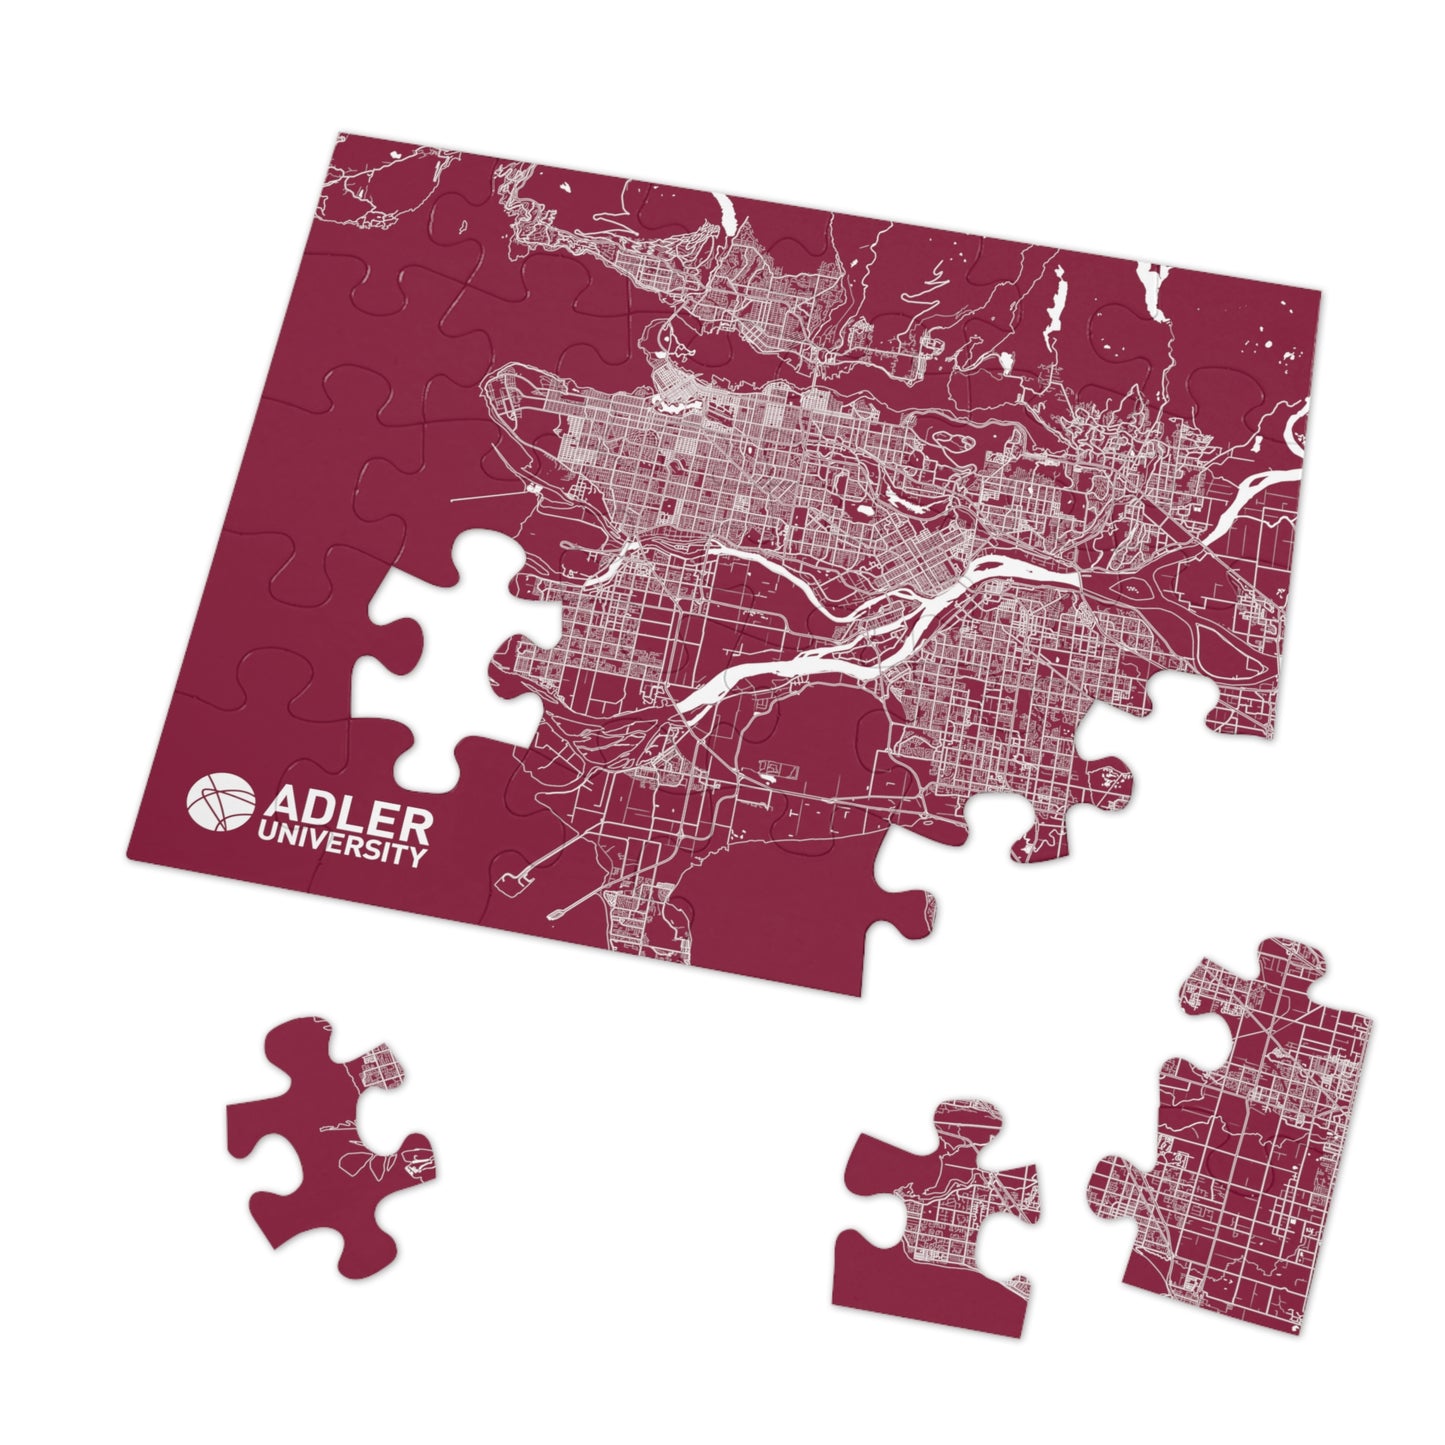 Adler University Vancouver Jigsaw Puzzle